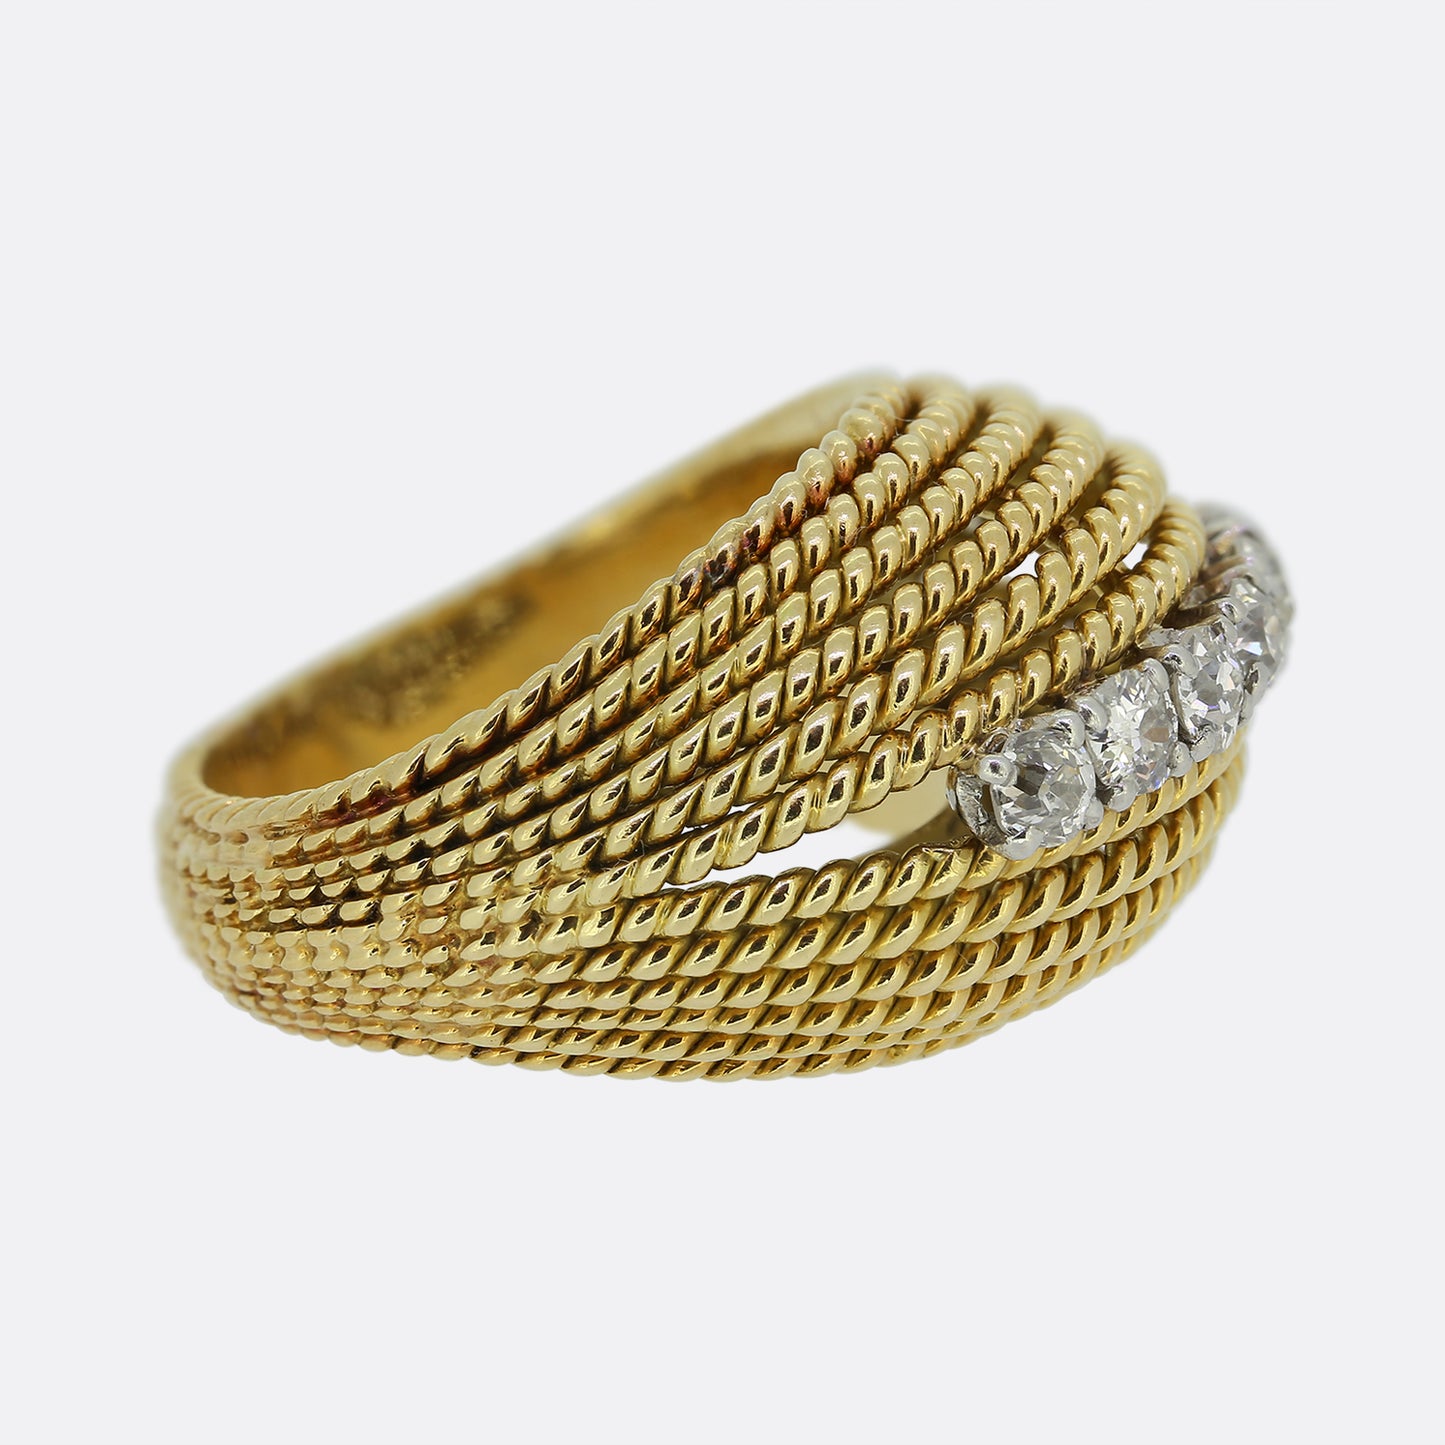 Vintage Six-Stone Diamond Ring